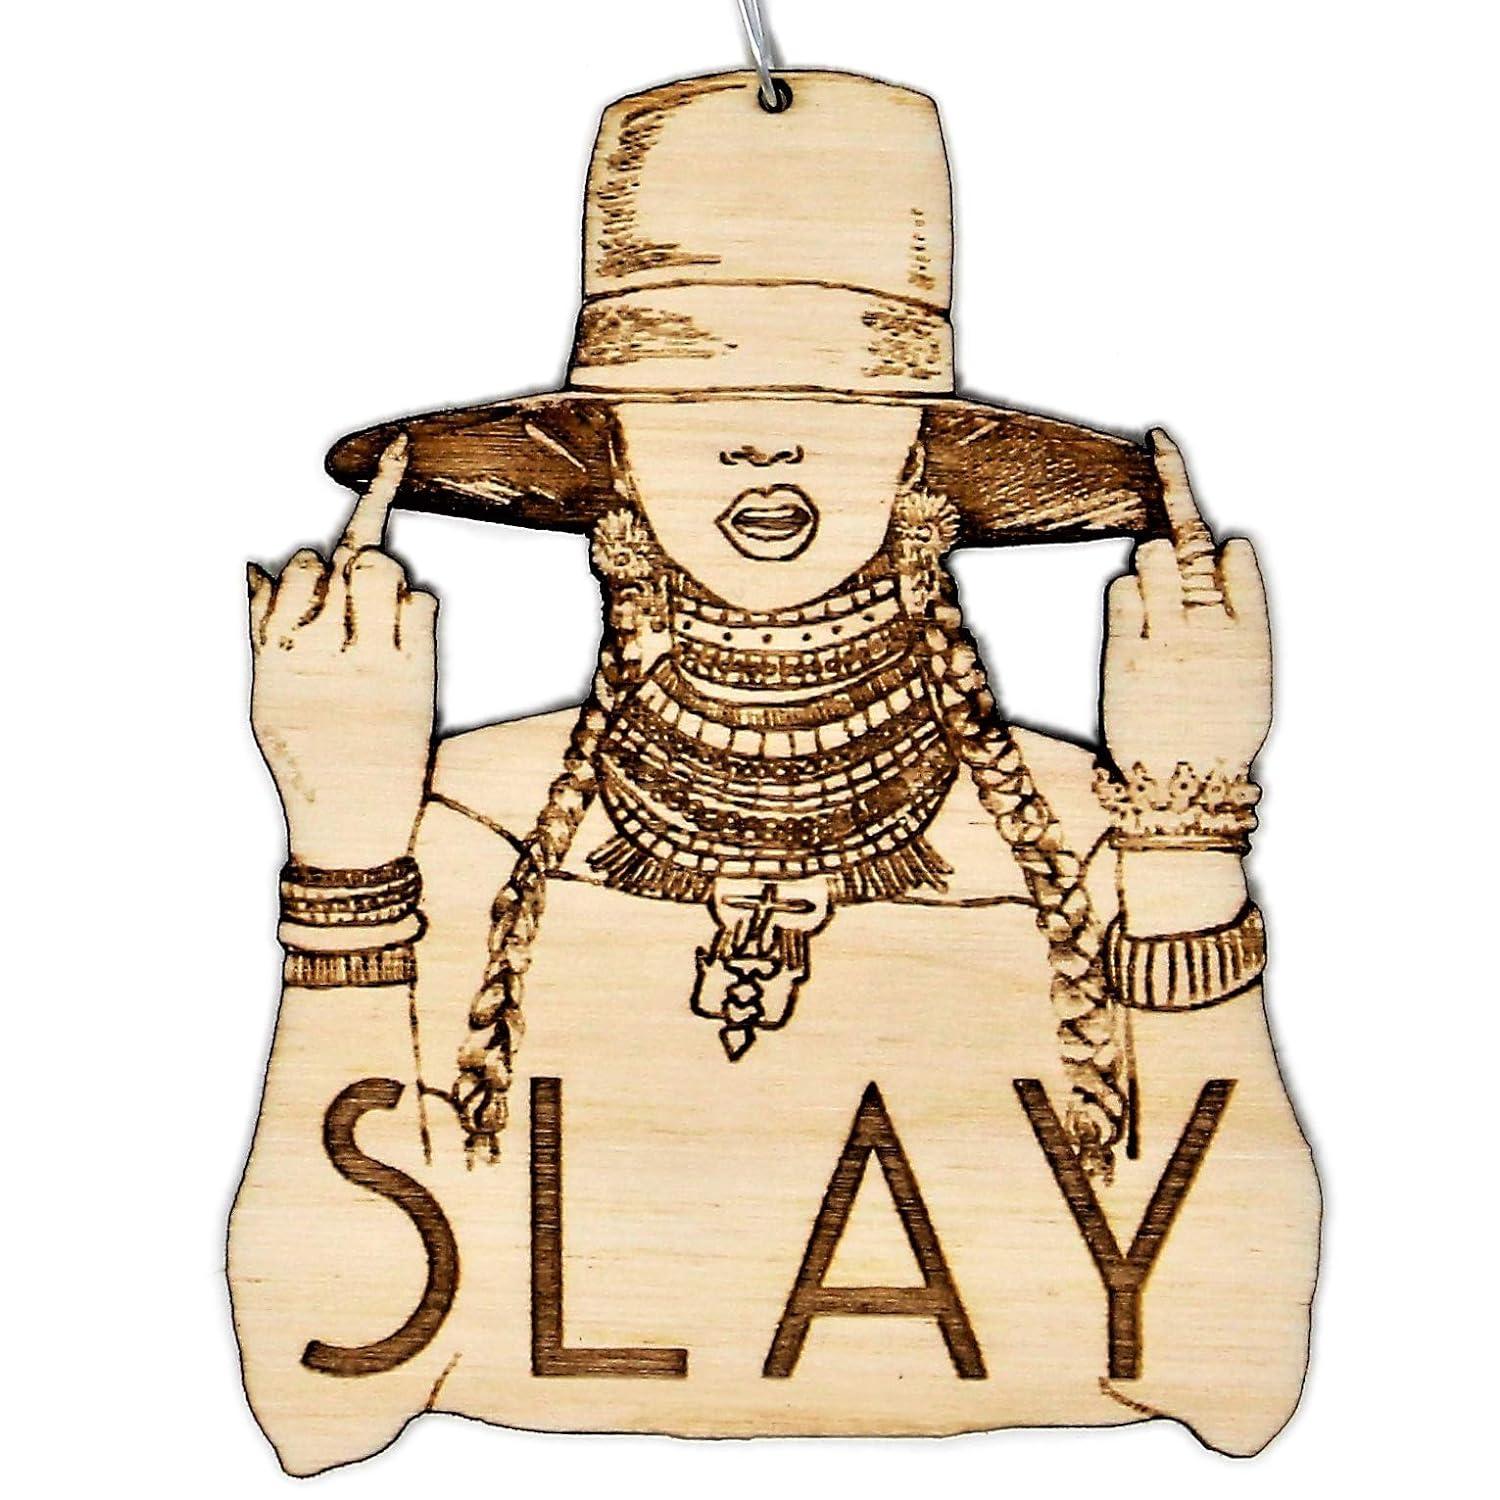 "Slay"라는 단어가 있는 비욘세의 실루엣 장식